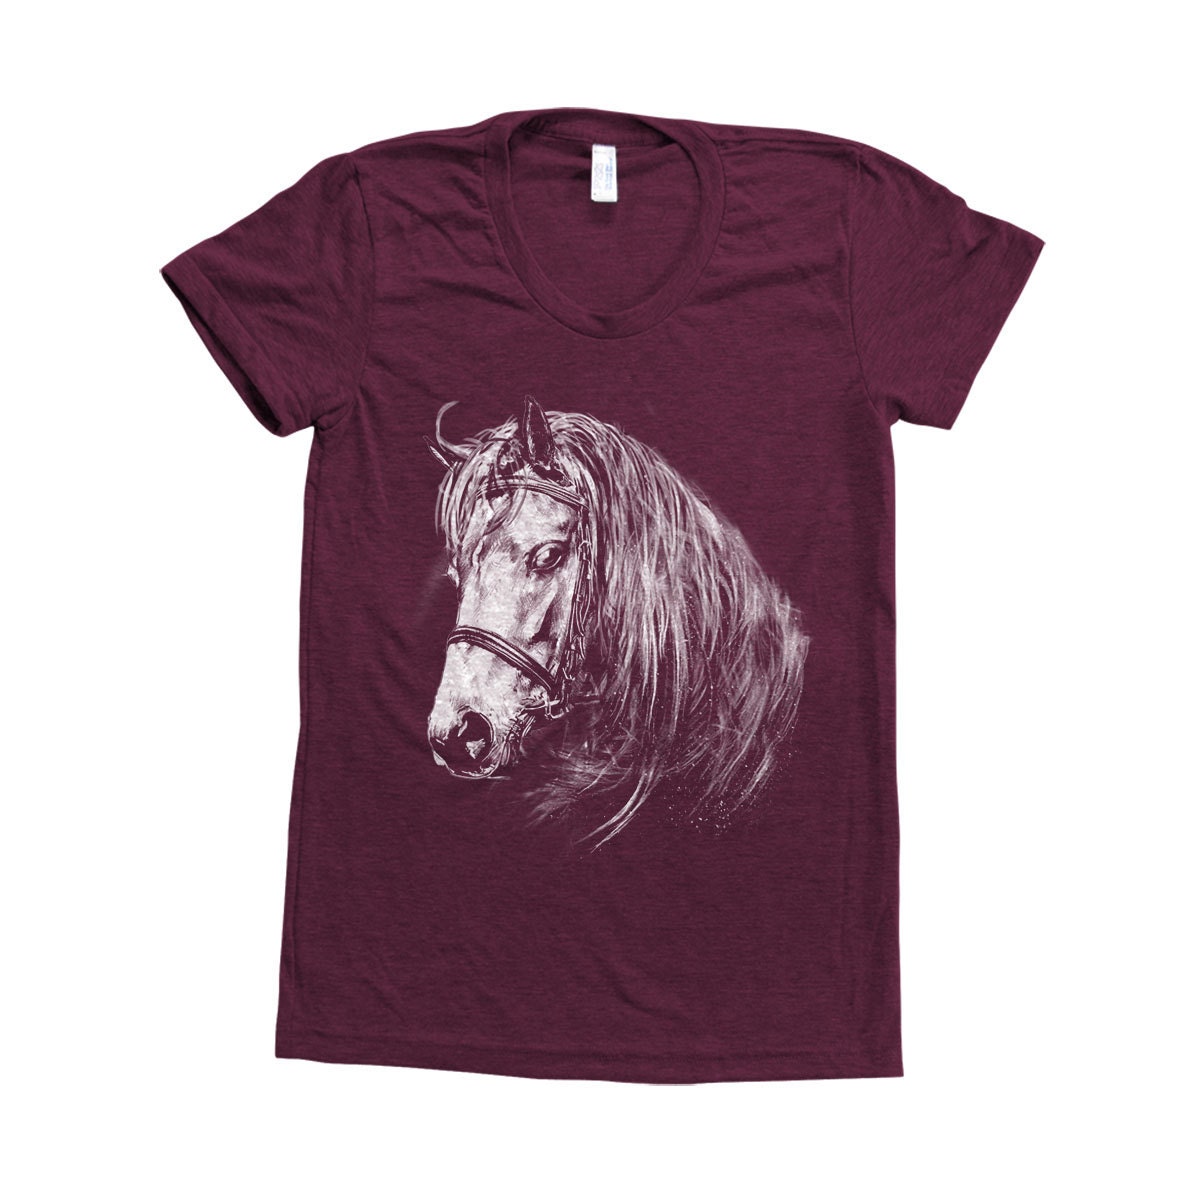 Horse Shirt Women Tri-Blend Short Sleeve Screen Print Tshirt Available S, M, L, Xl